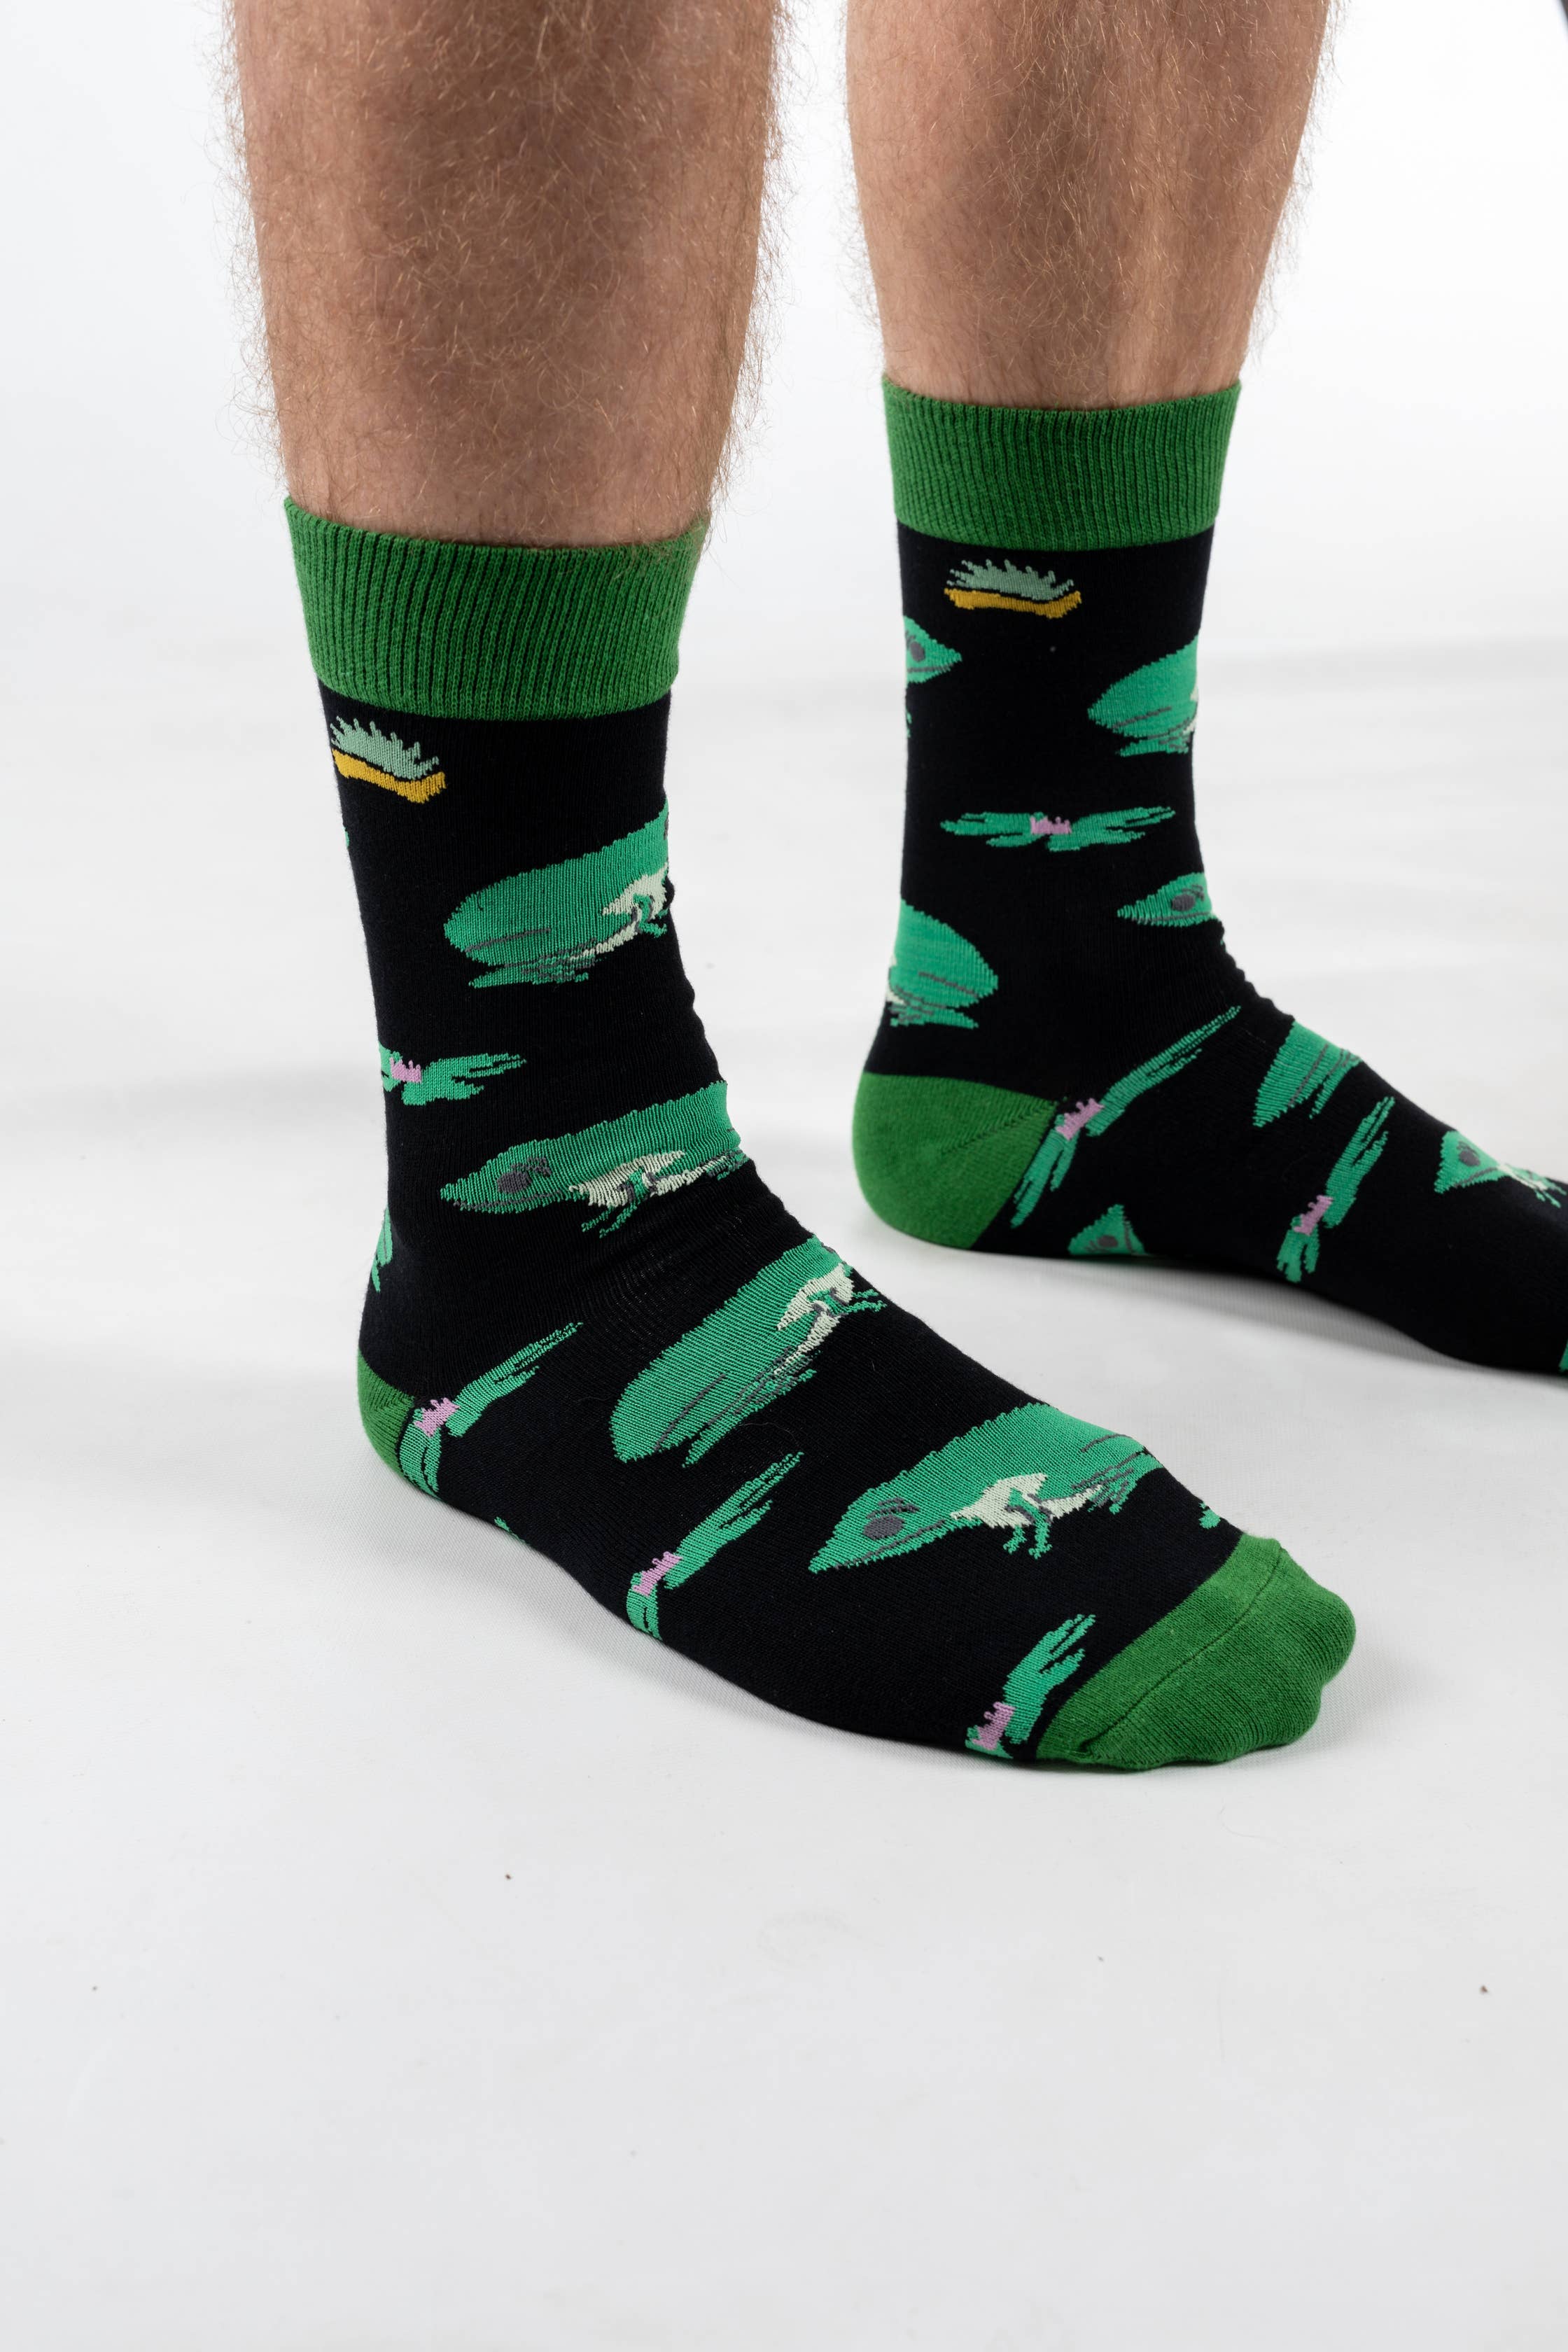 Frog socks UK 3-7 (EU 36-40) by Hedgy socks